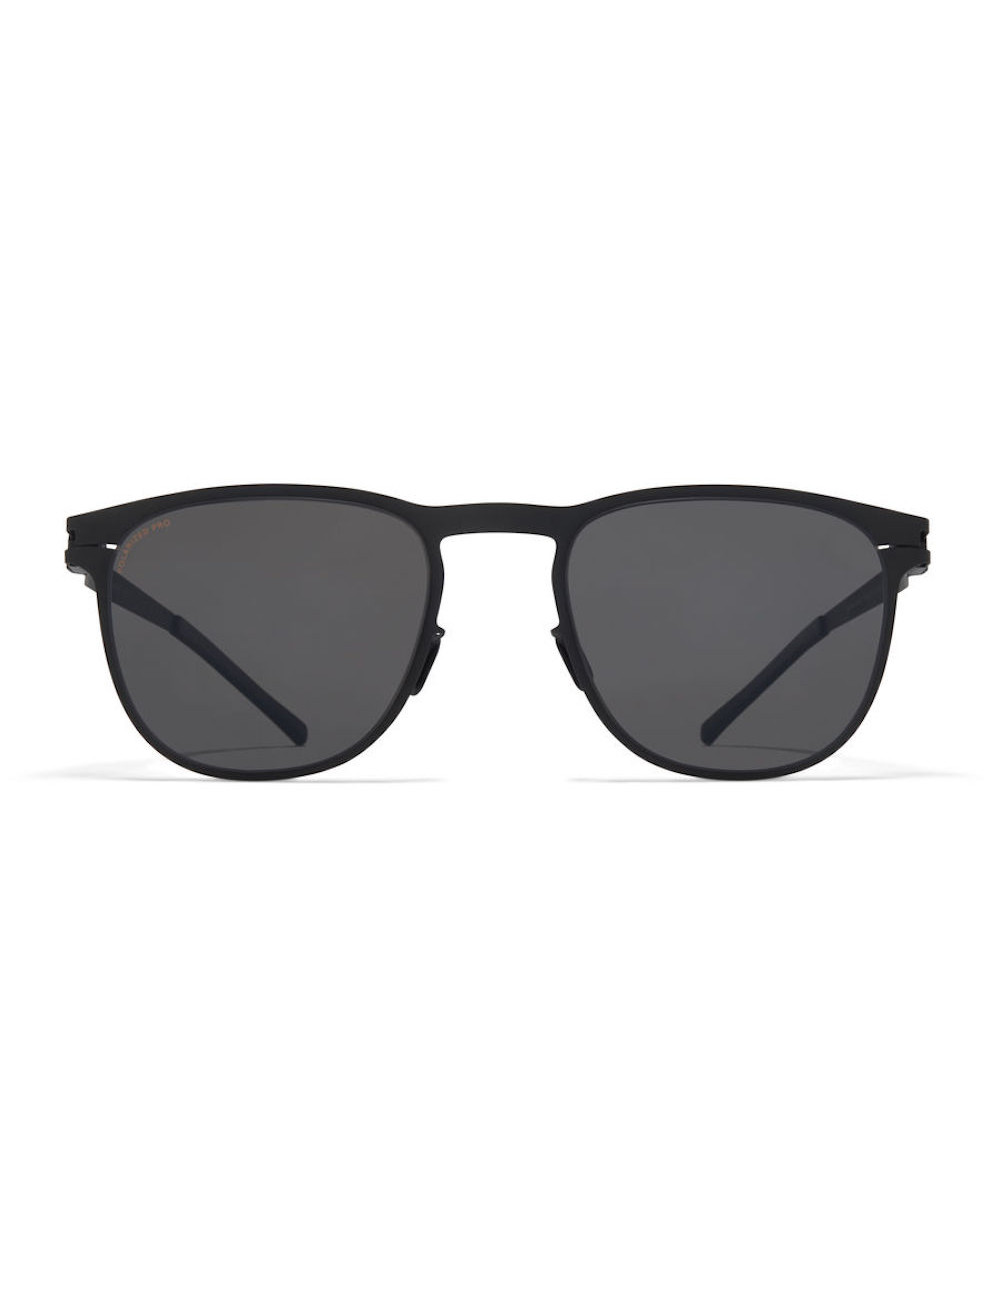 MYKITA STANLEY polarized sunglasses for men – Ottica Mauro